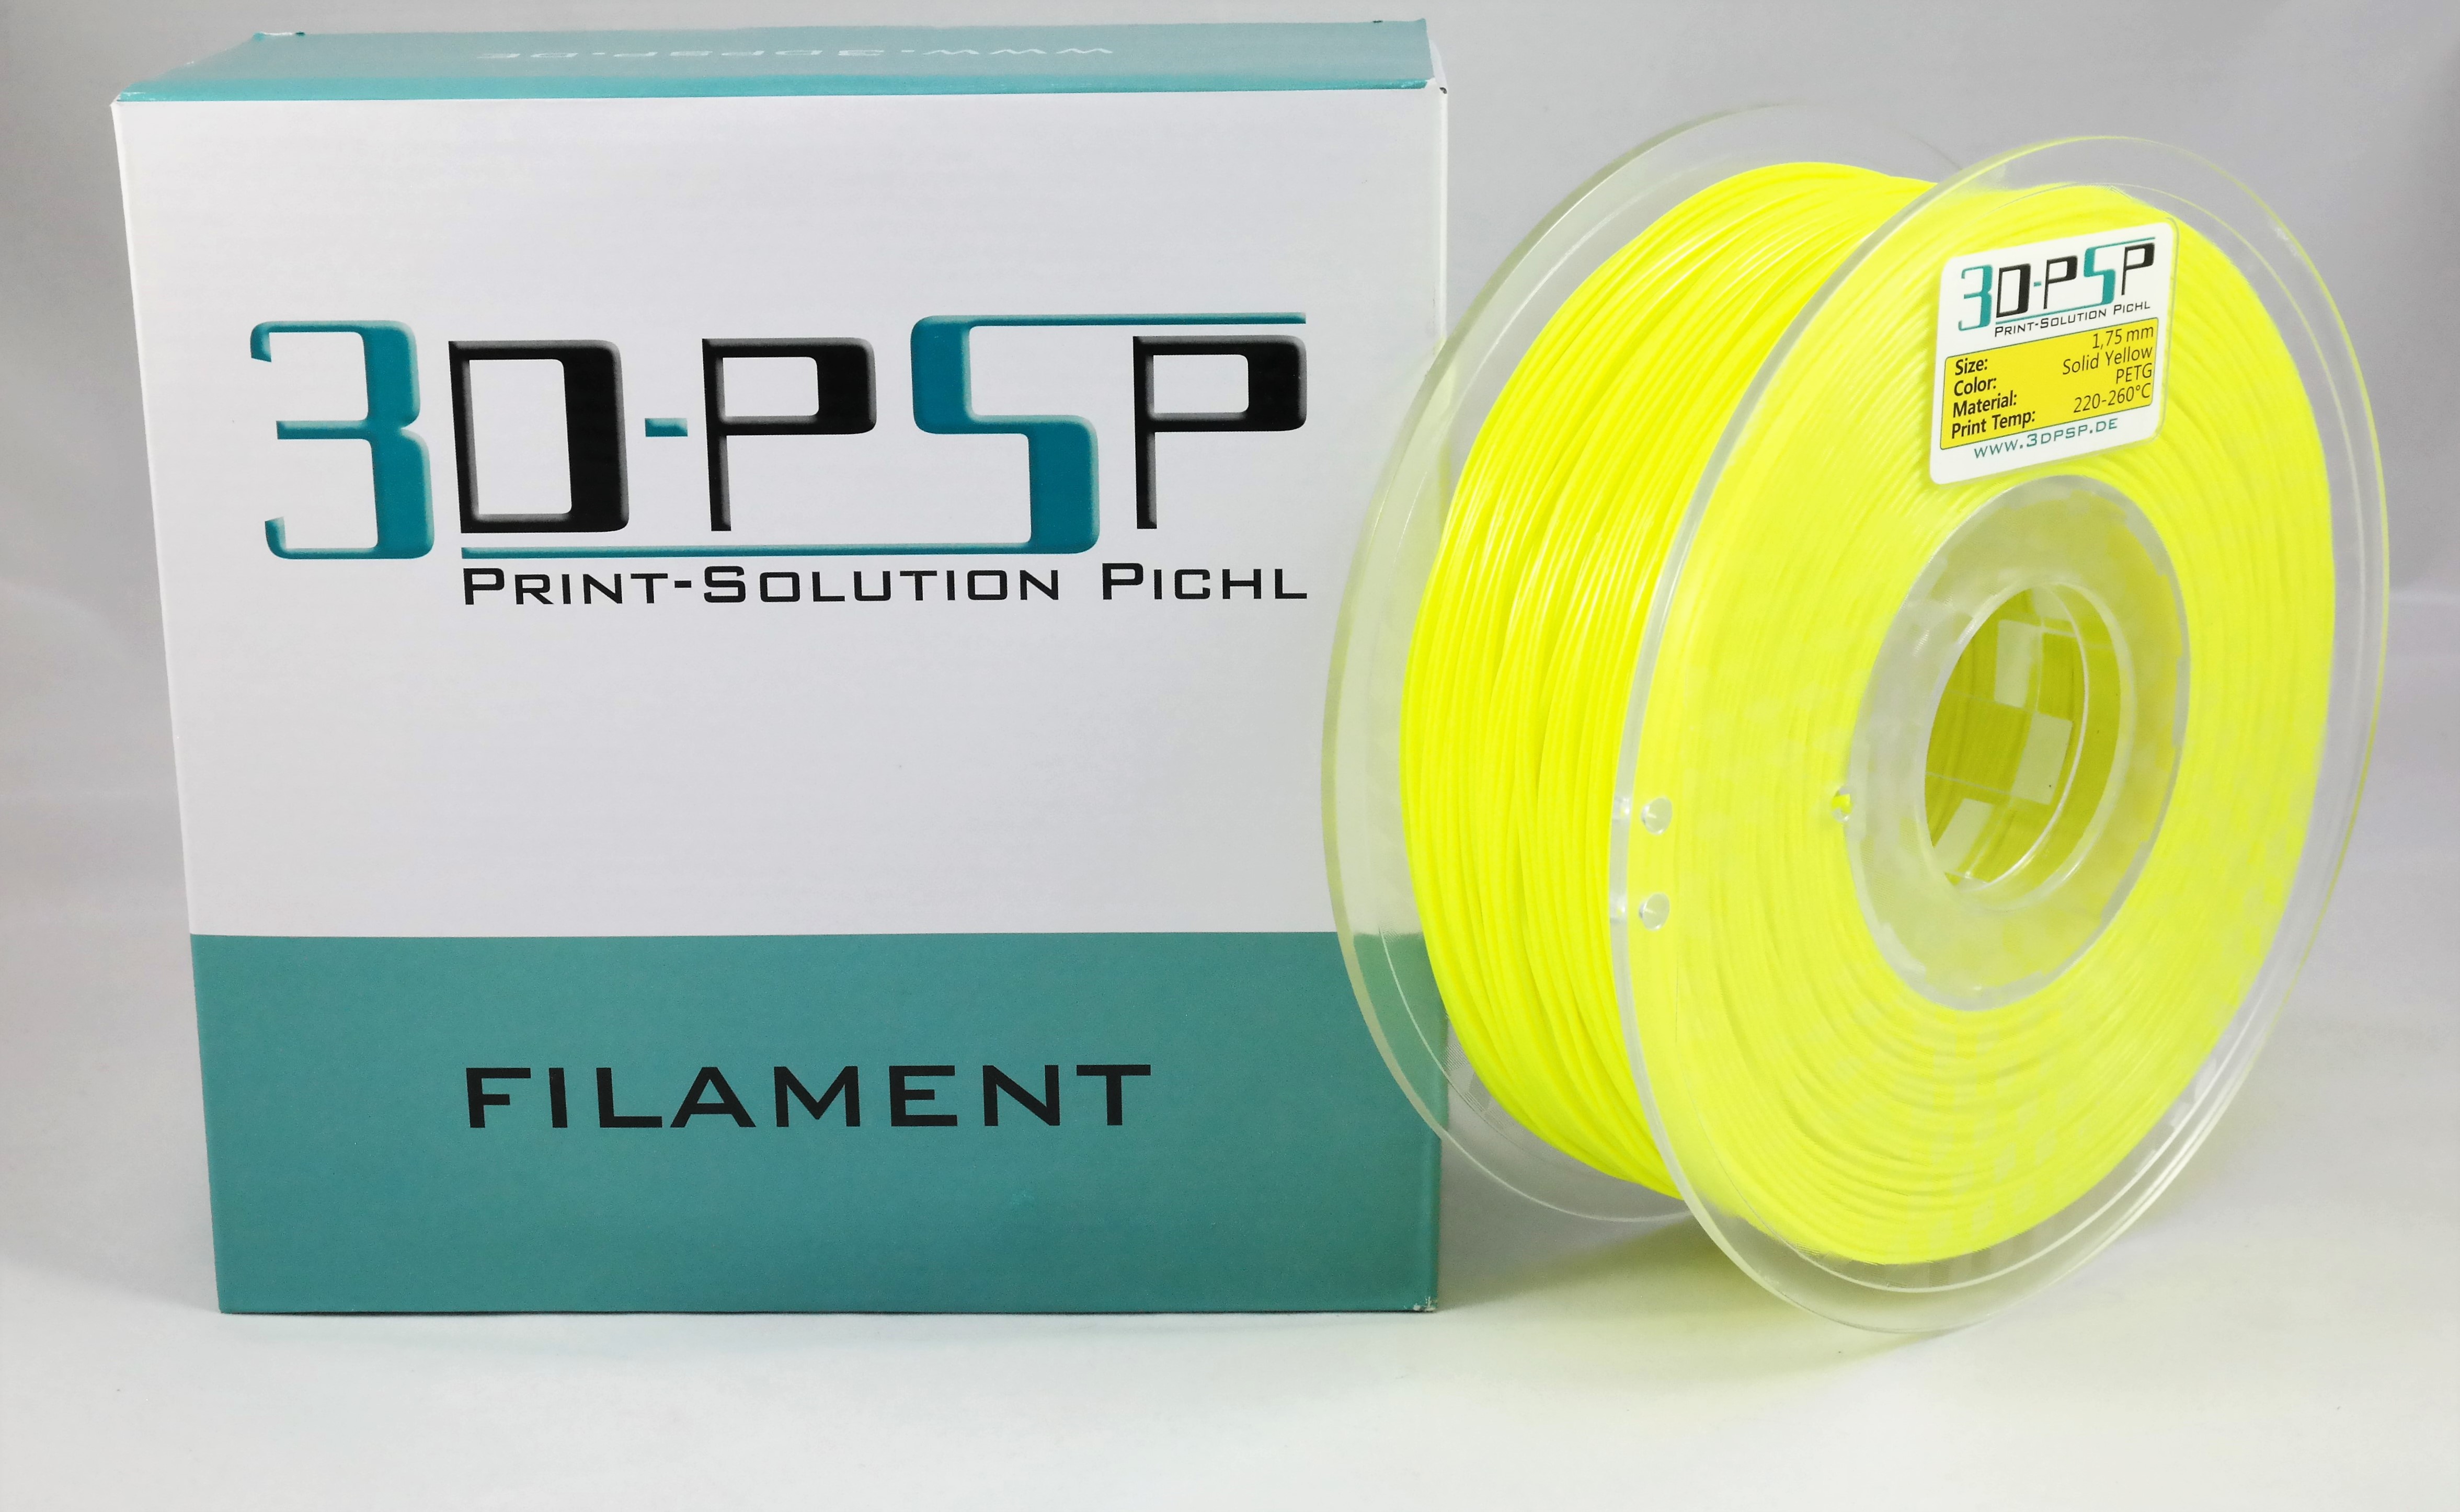 3DPSP PETG Filament - Solid Yellow - 1.75mm - 1Kg